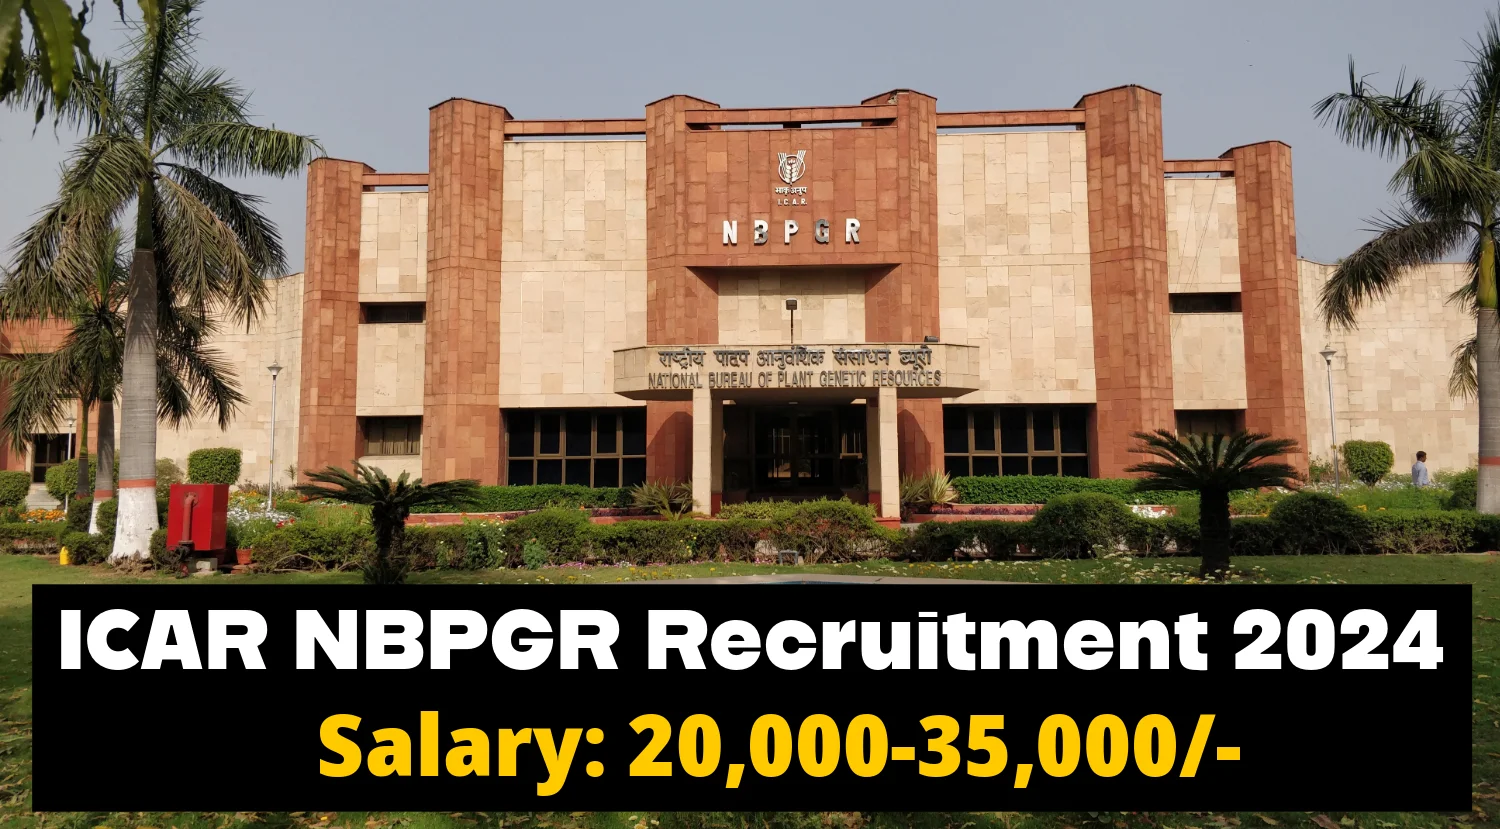 ICAR NBPGR Recruitment 2024